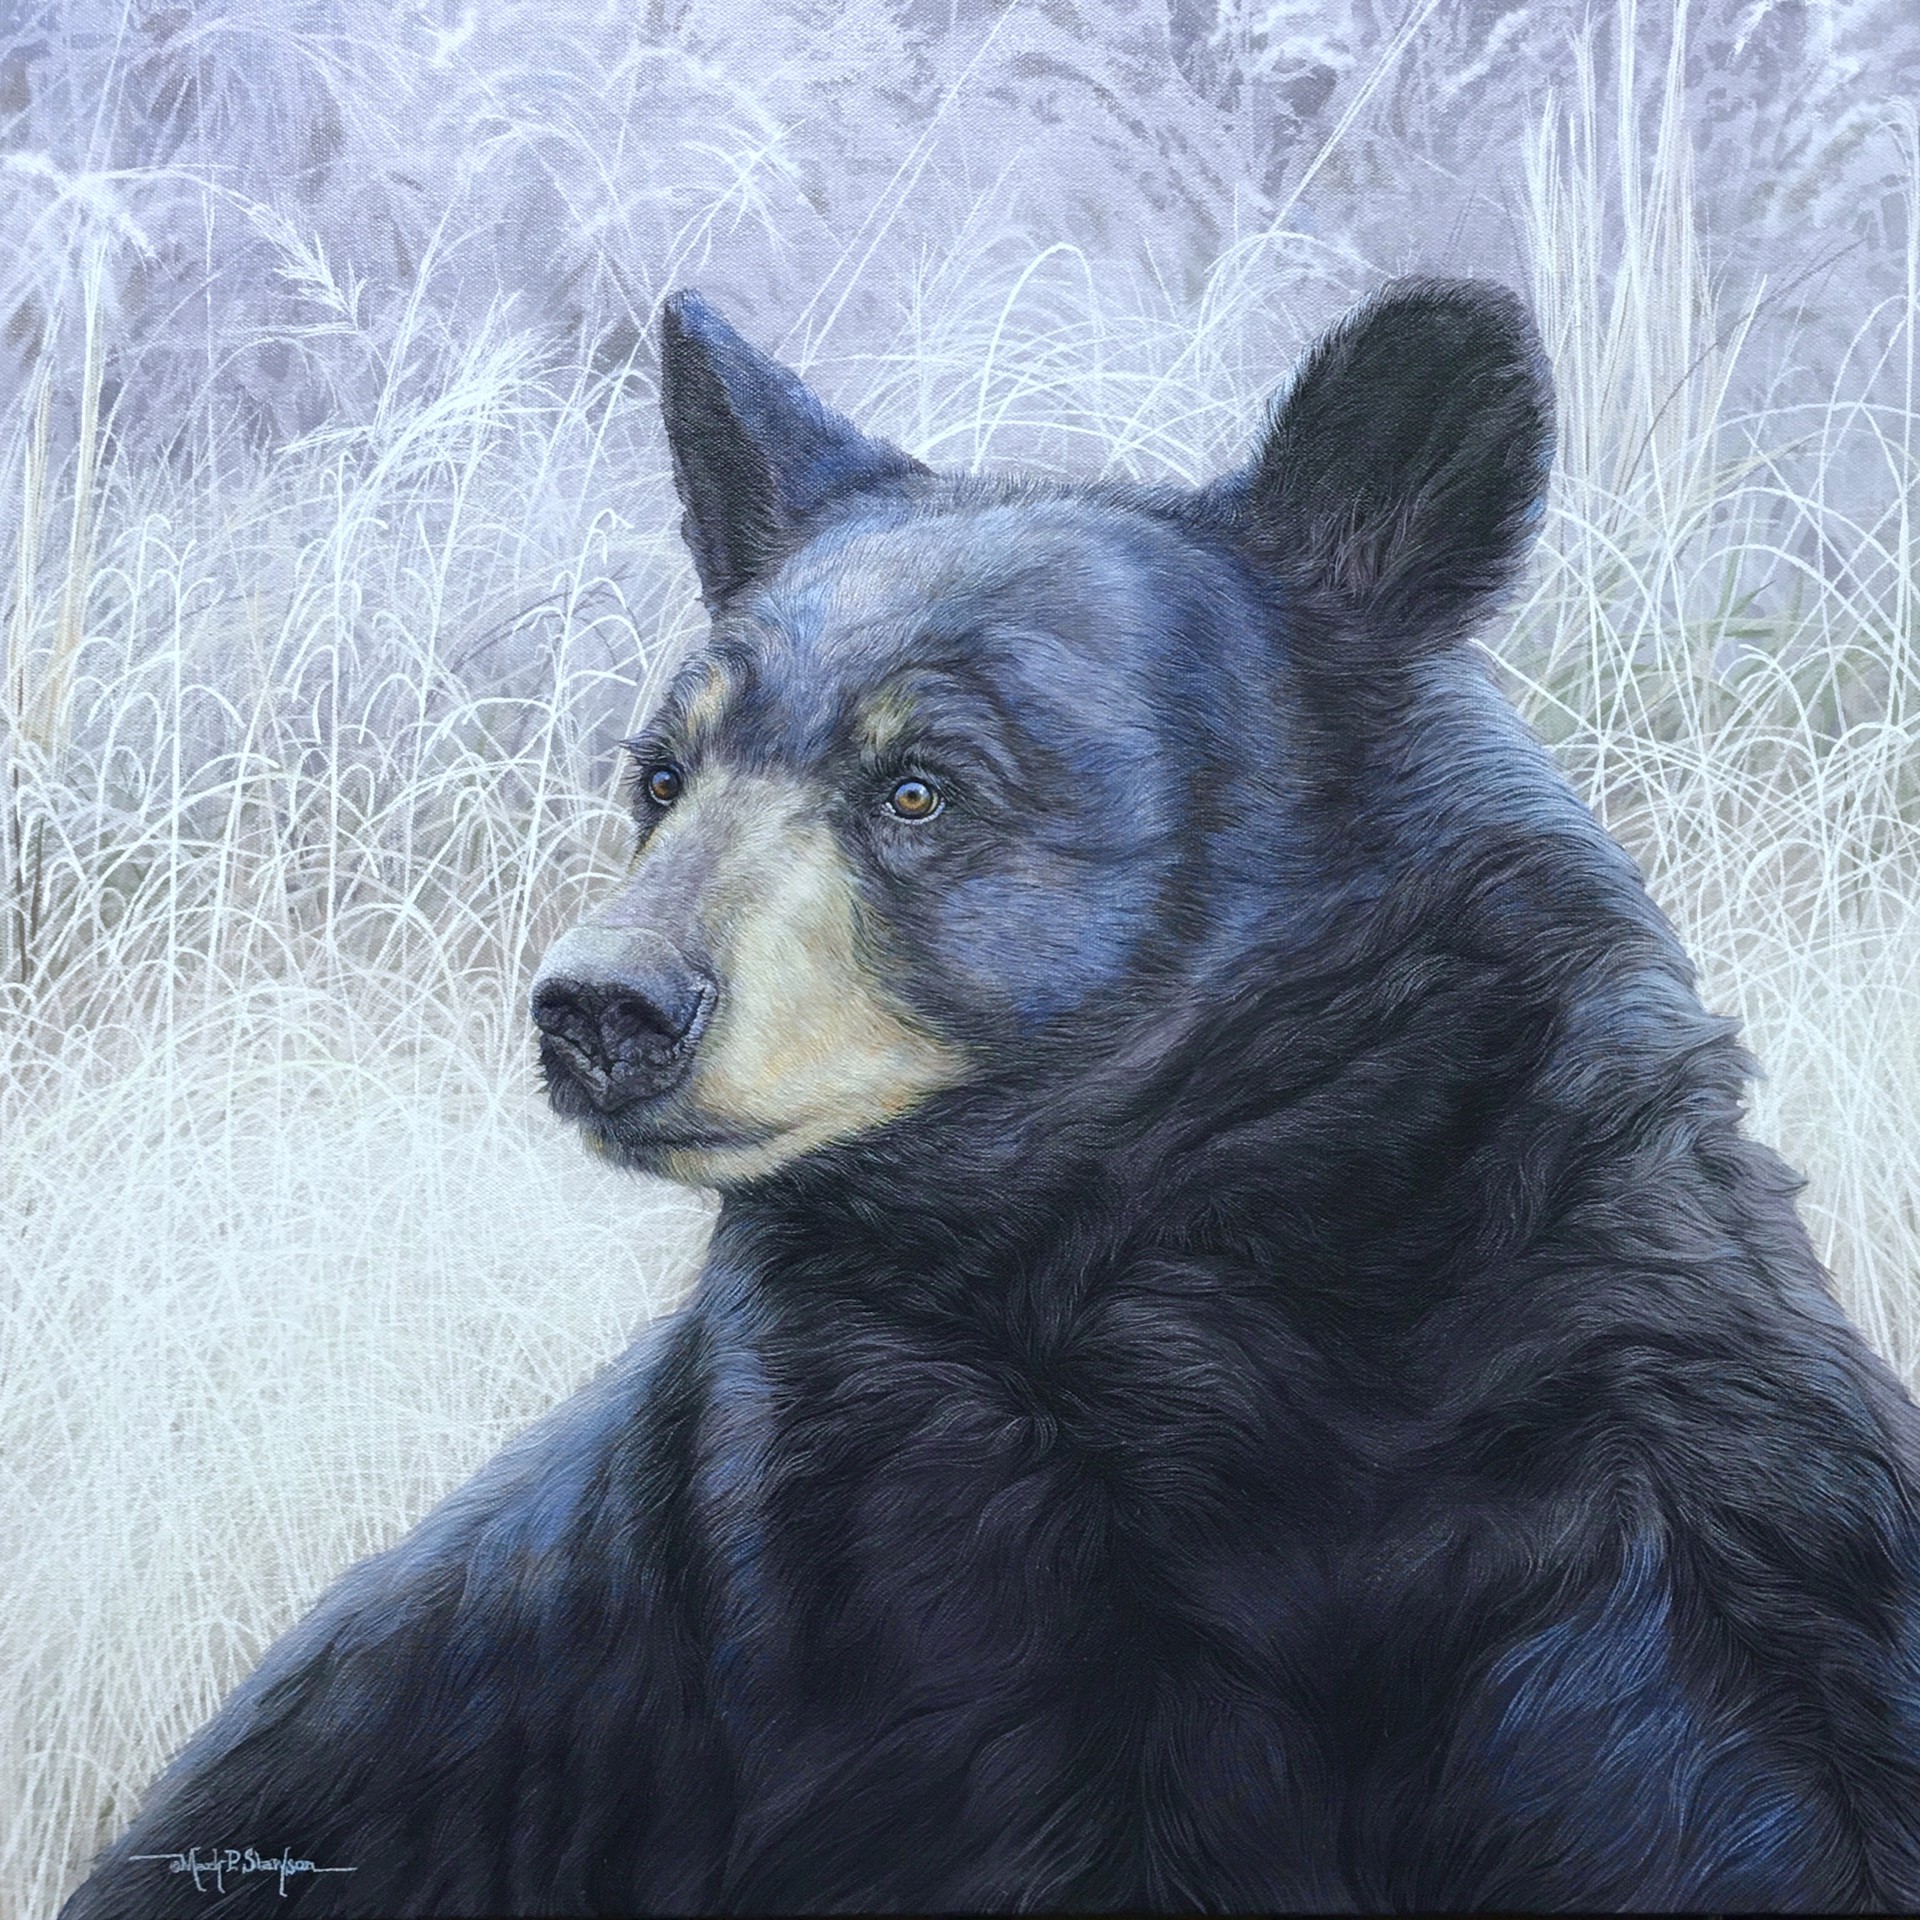 Made Aware Bear by Mark Slawson